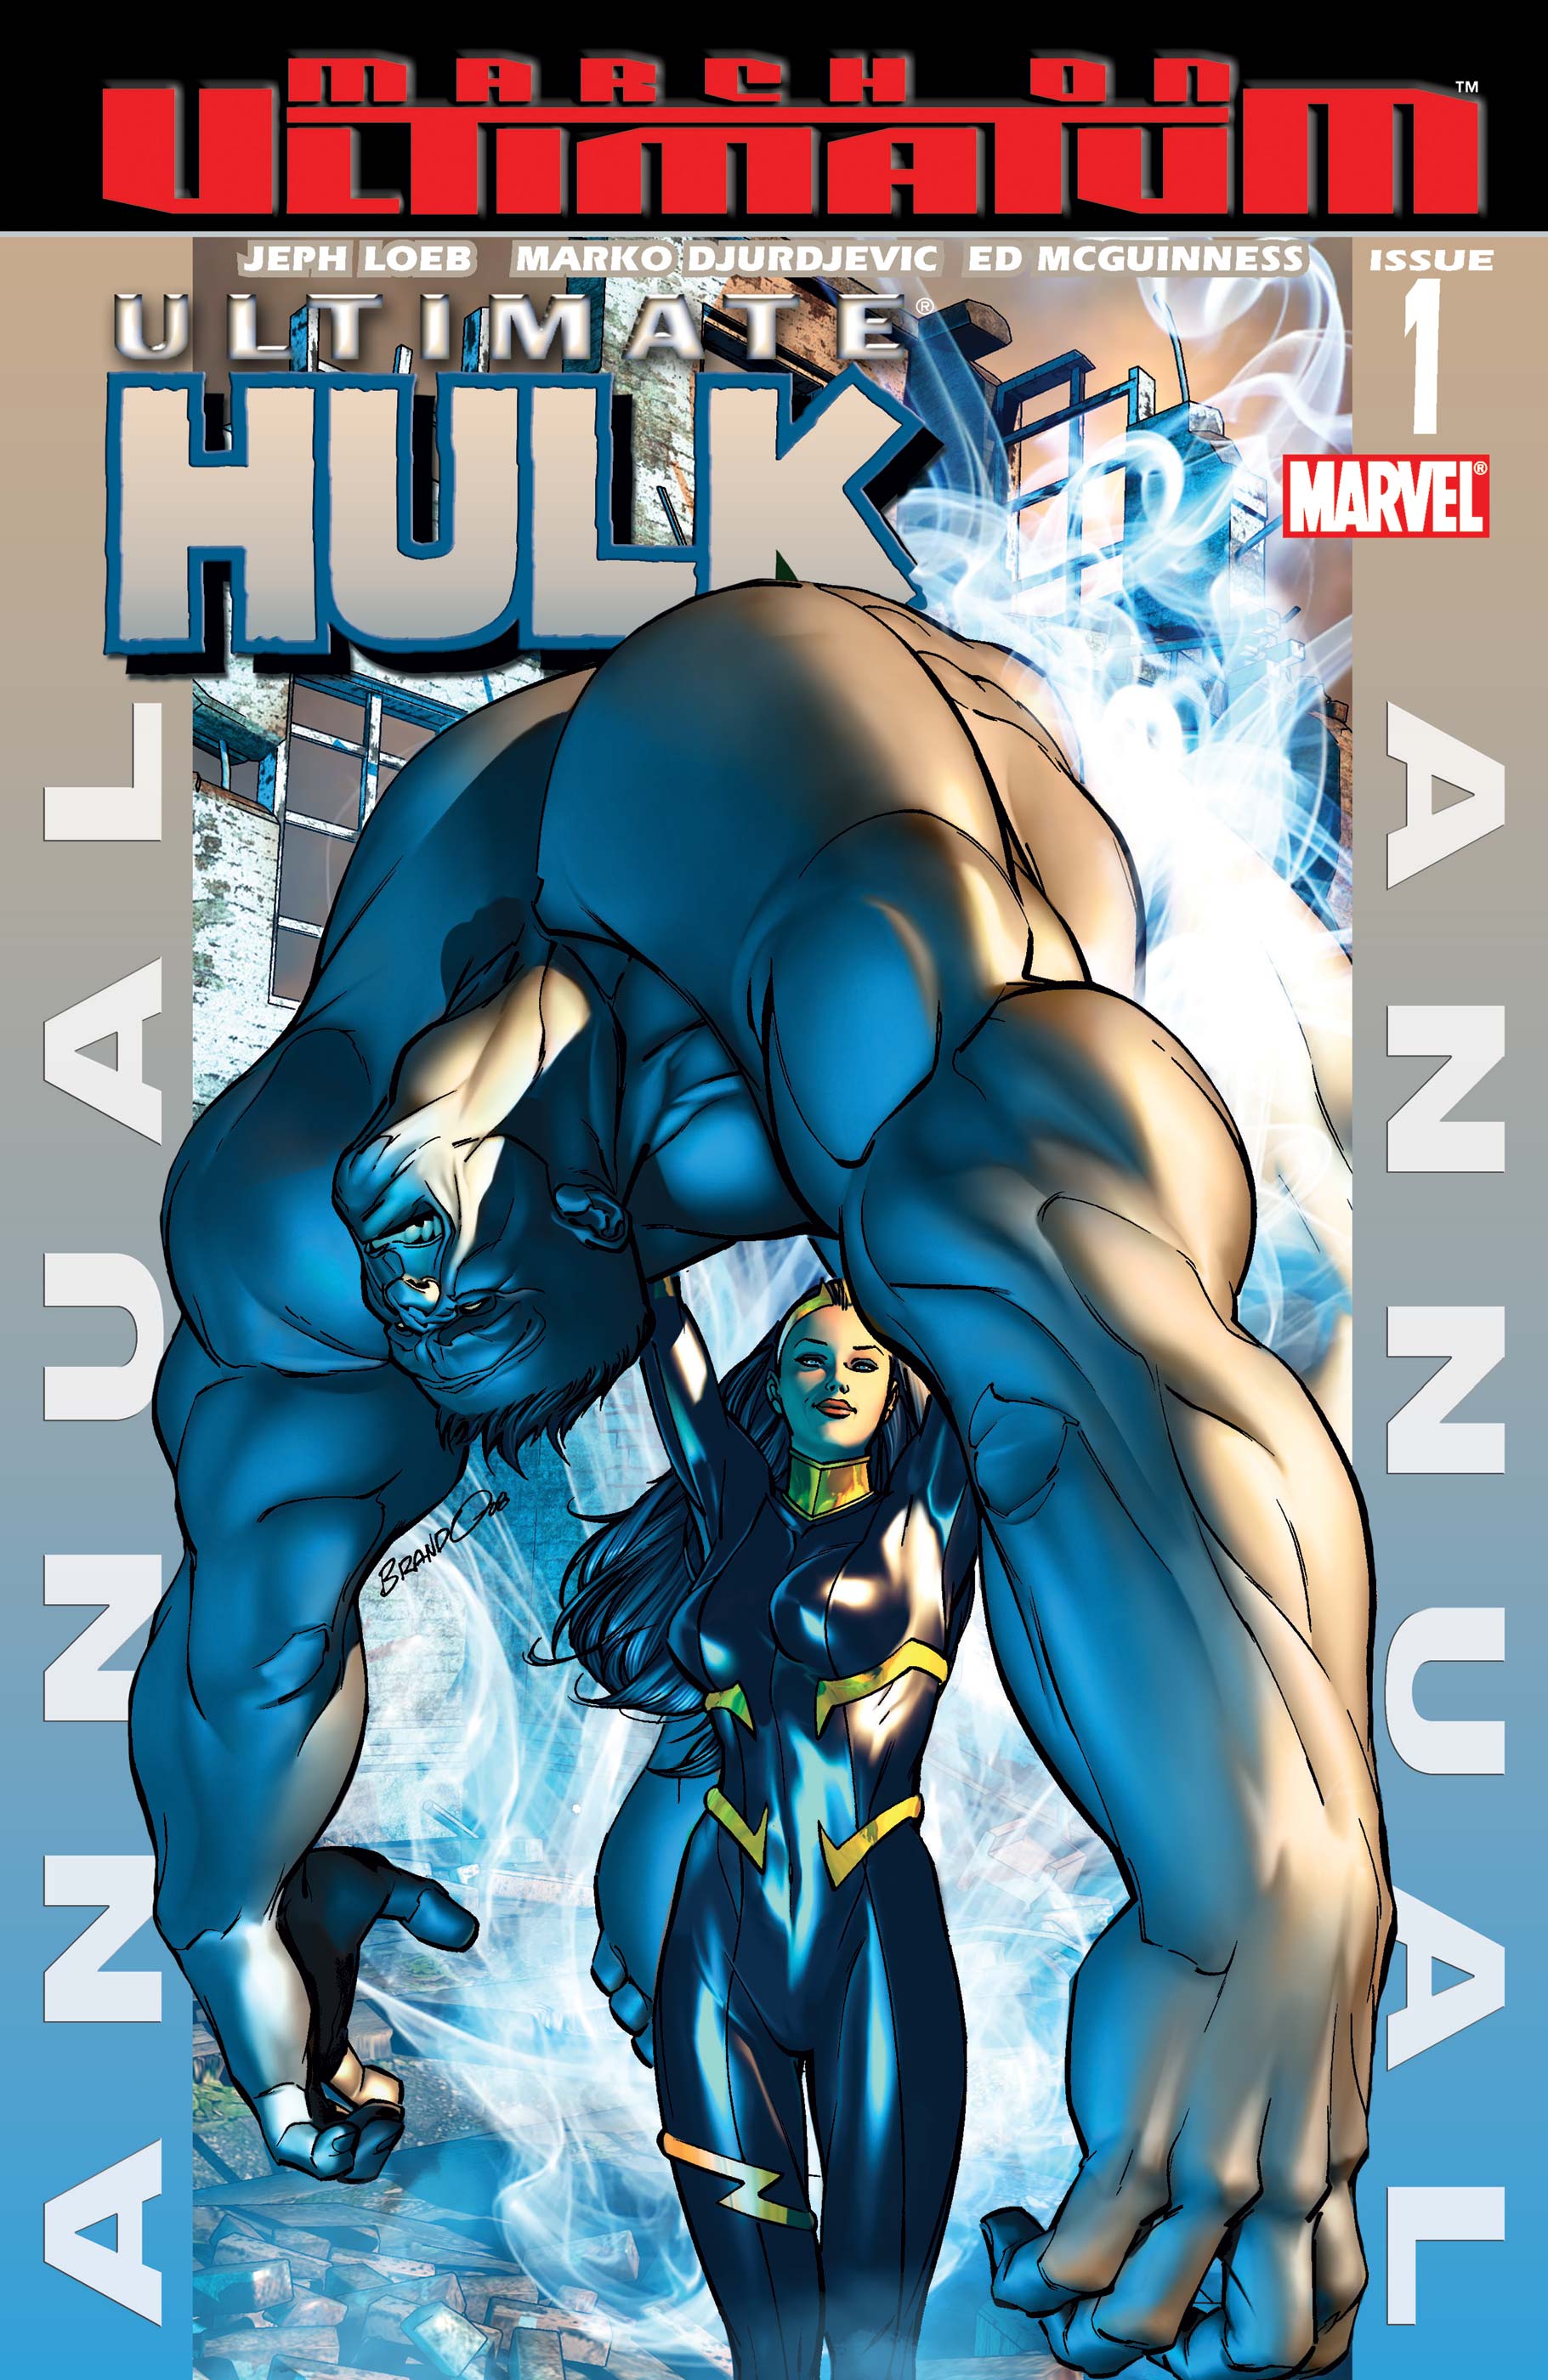 Ultimate Hulk Annual (2008) #1